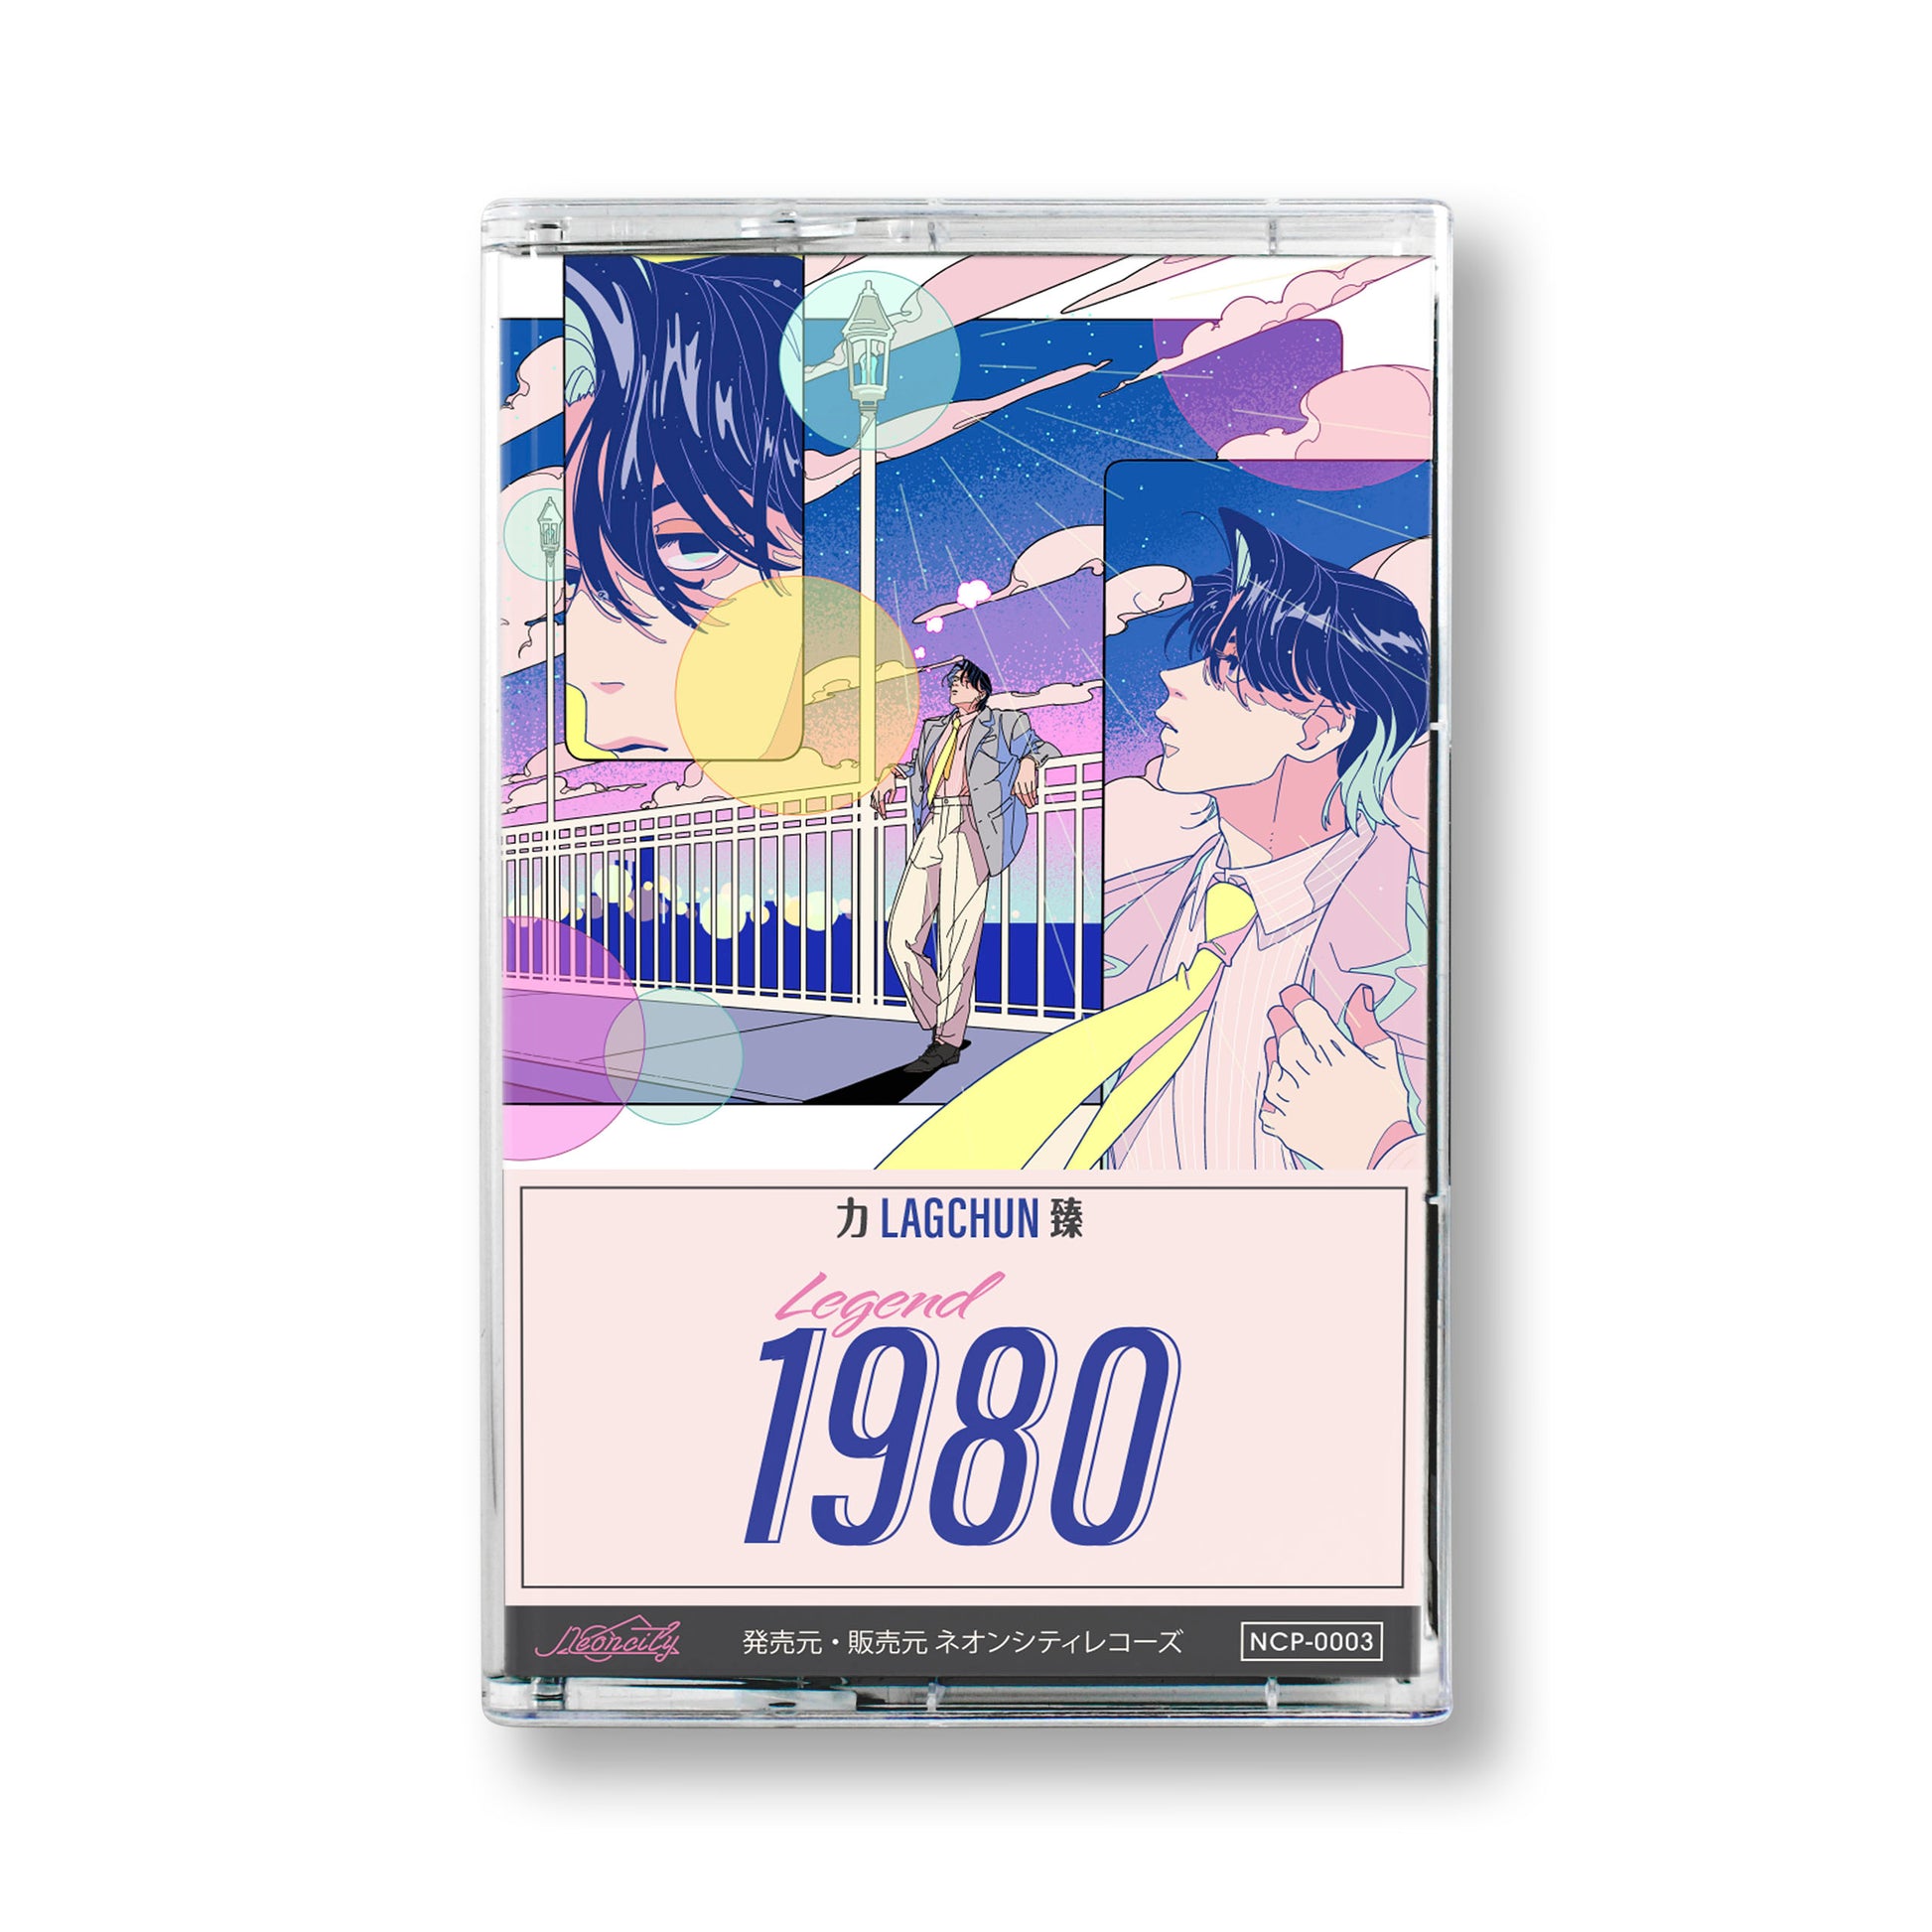 Lagchun力臻 ‘Legend 1980’ Cassette Tape - Neoncity Records